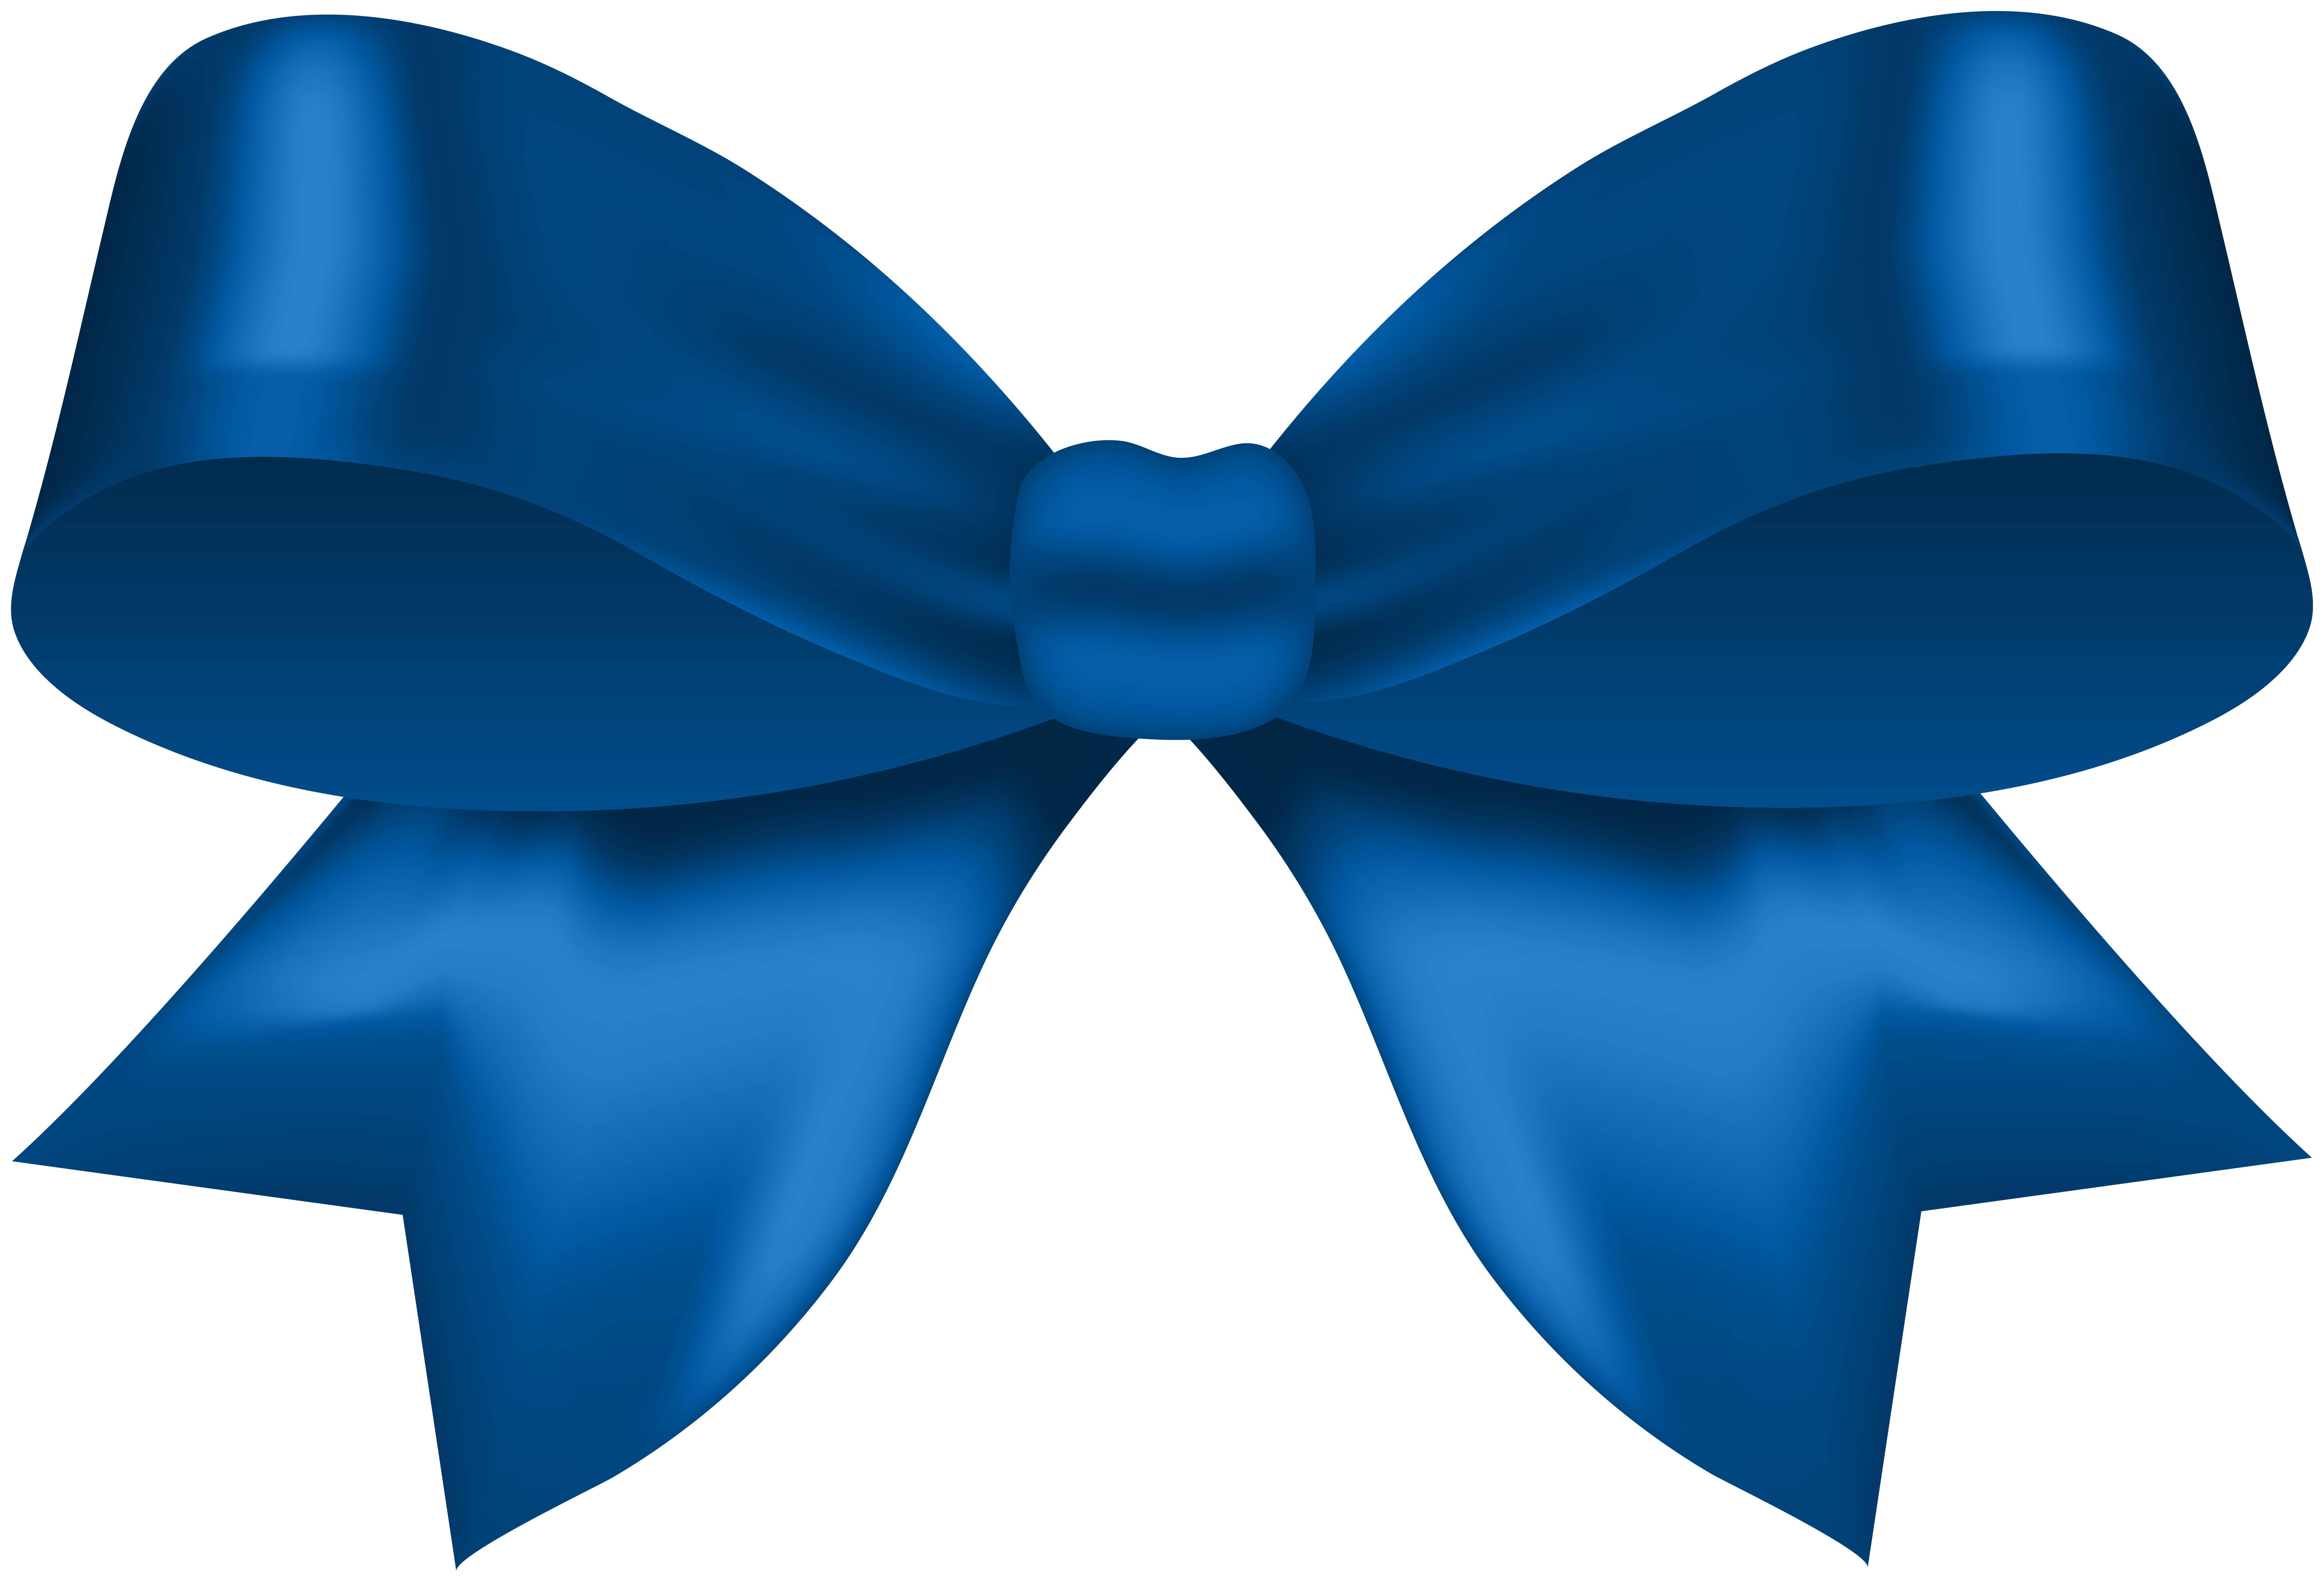 Blue Bow Clip Art at  - vector clip art online, royalty free &  public domain